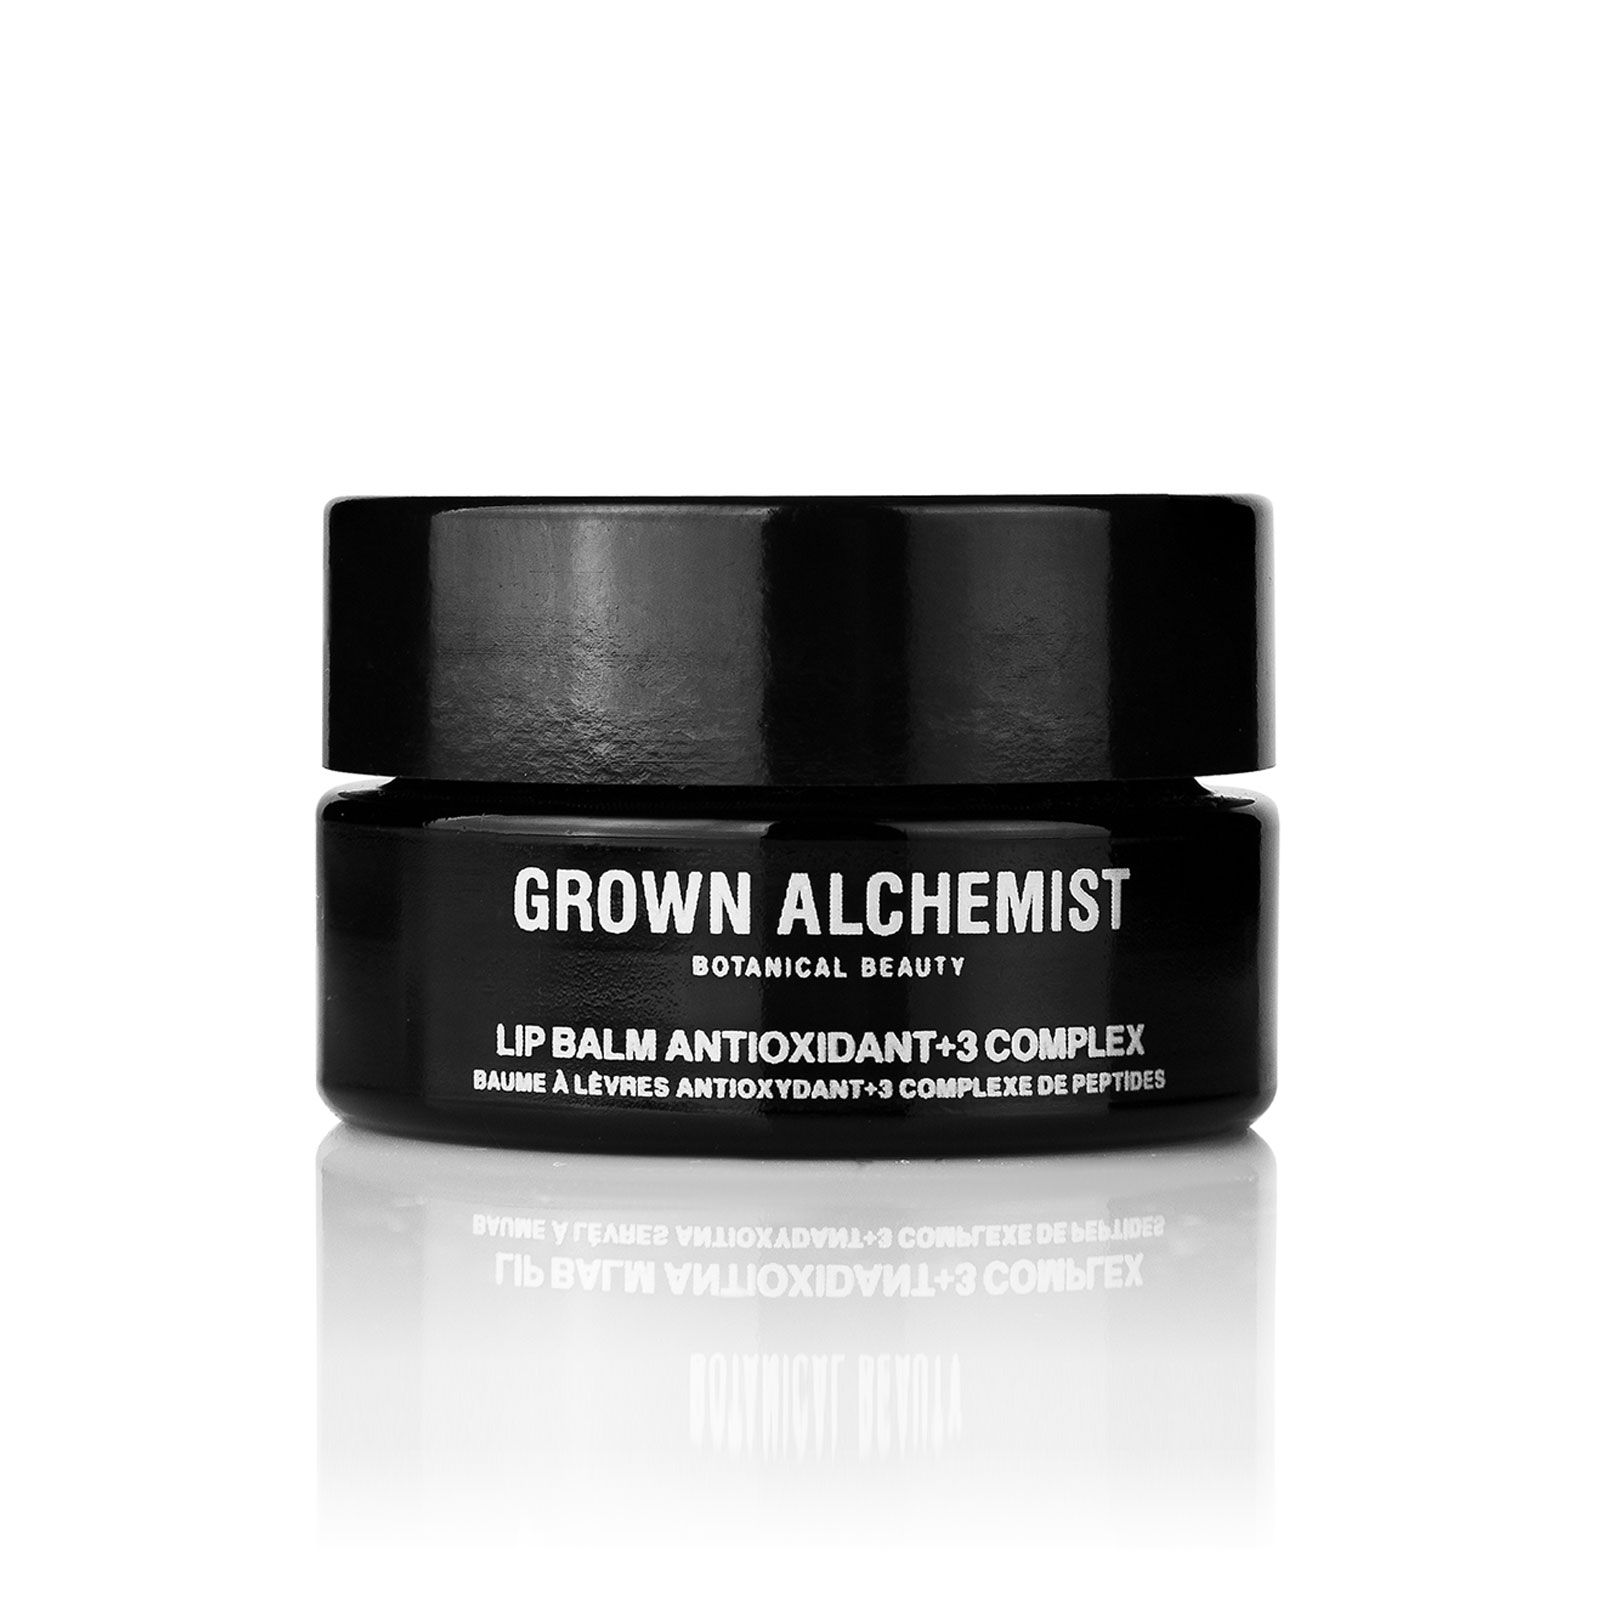 Grown Alchemist Lip Balm (Antioxidant+3 Complex)